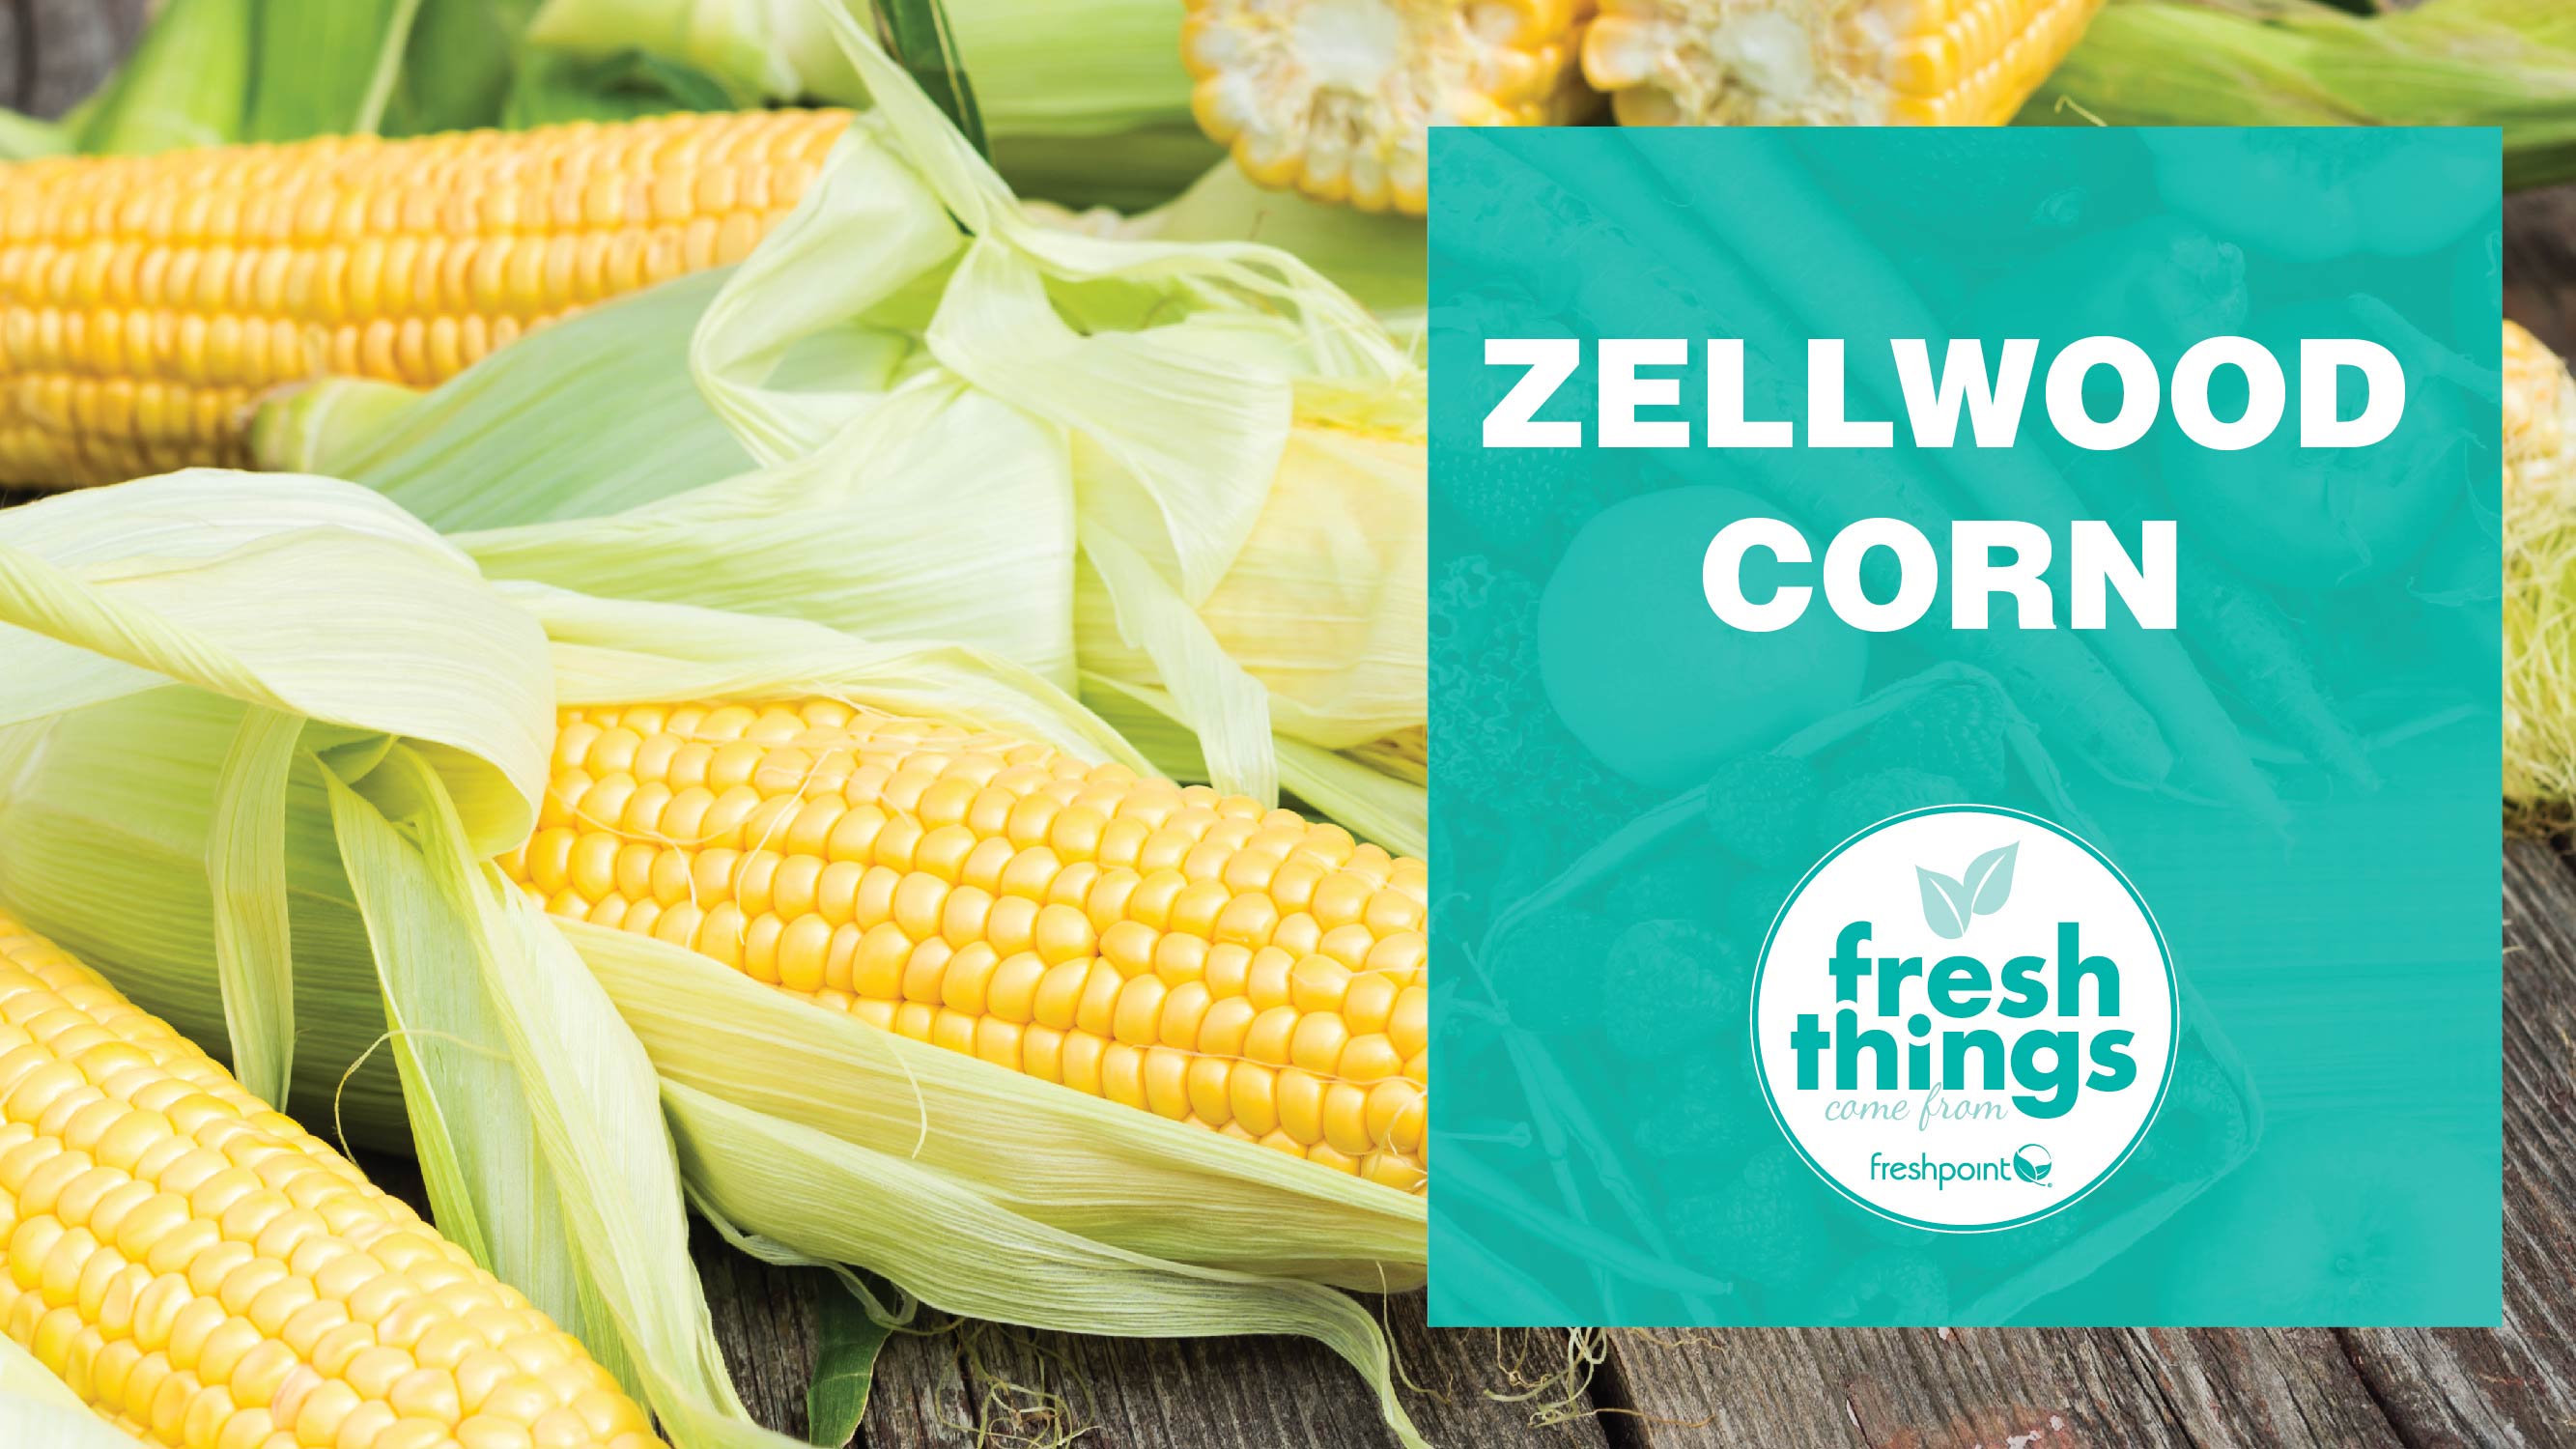 Zellwood-corn-freshpoint-produce